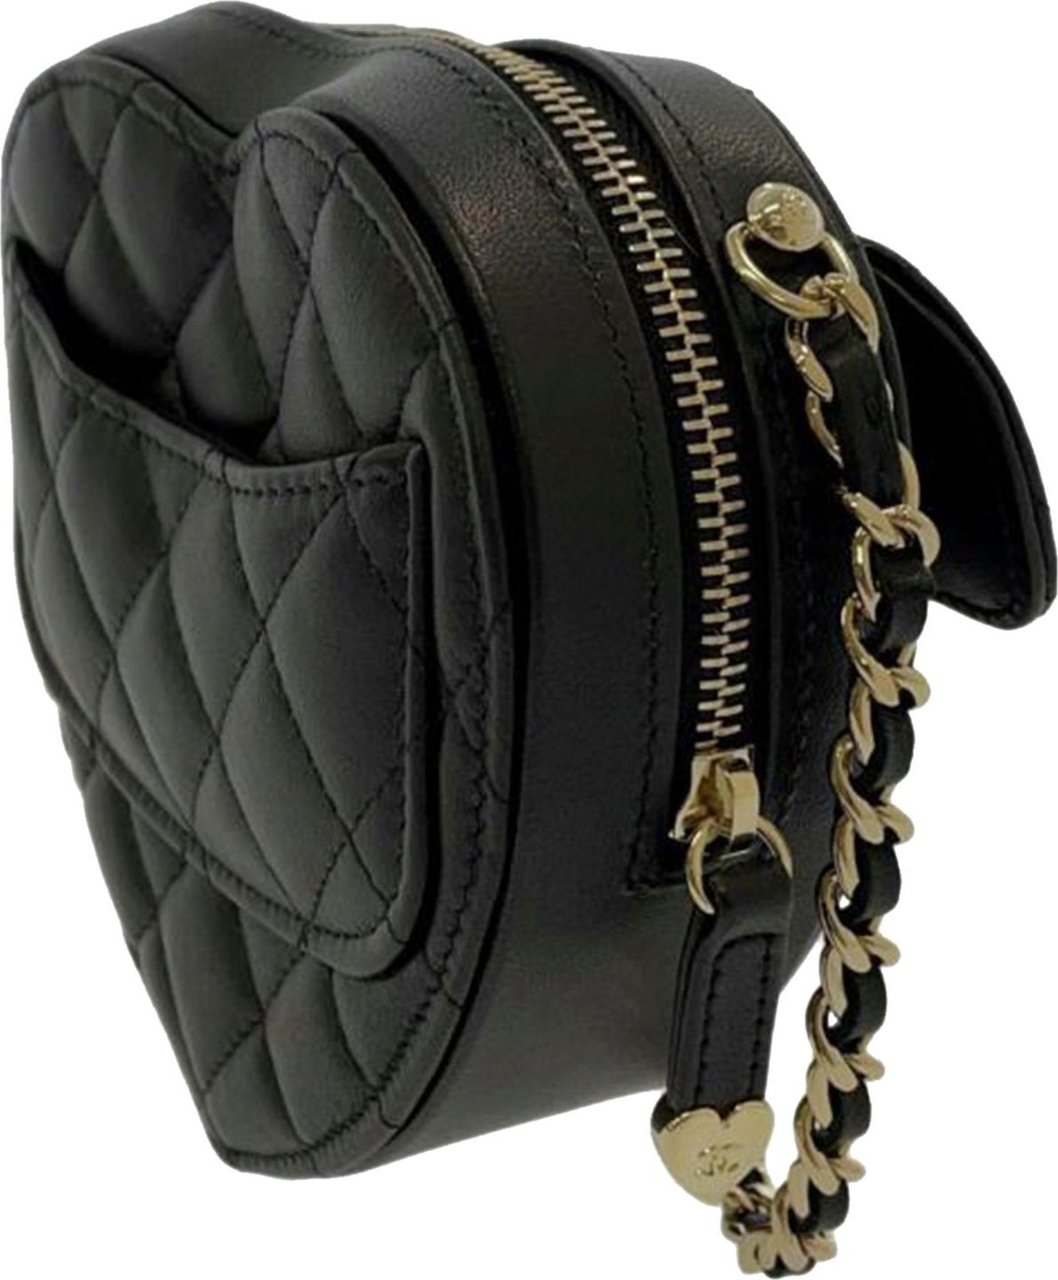 Chanel Mini CC in Love Heart Crossbody Bag Zwart